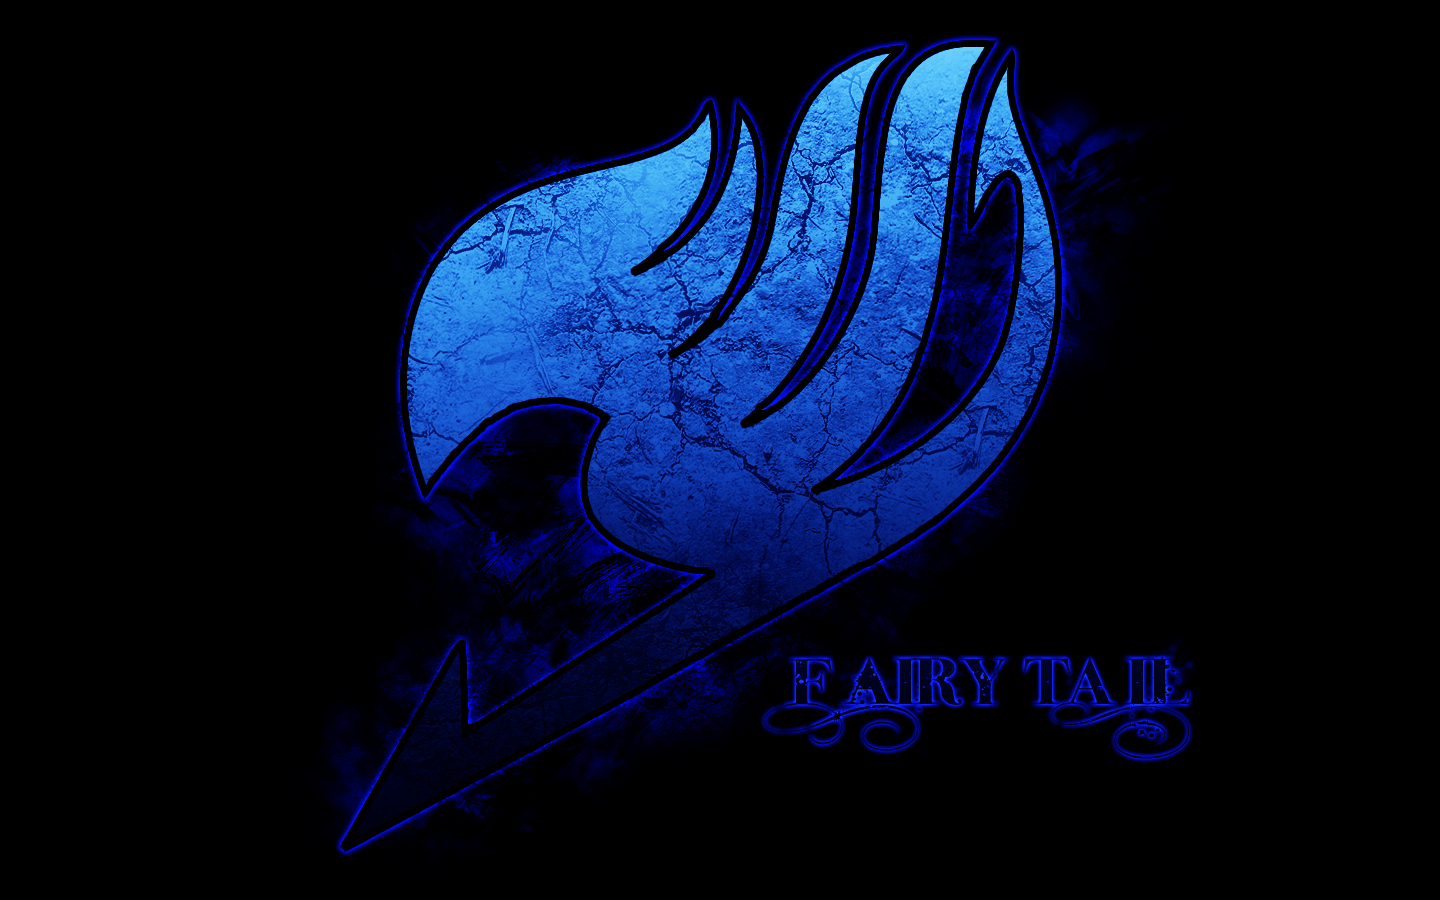 Download Free Fairy Tail Desktop Gadgets Phillipgarvin S Blog